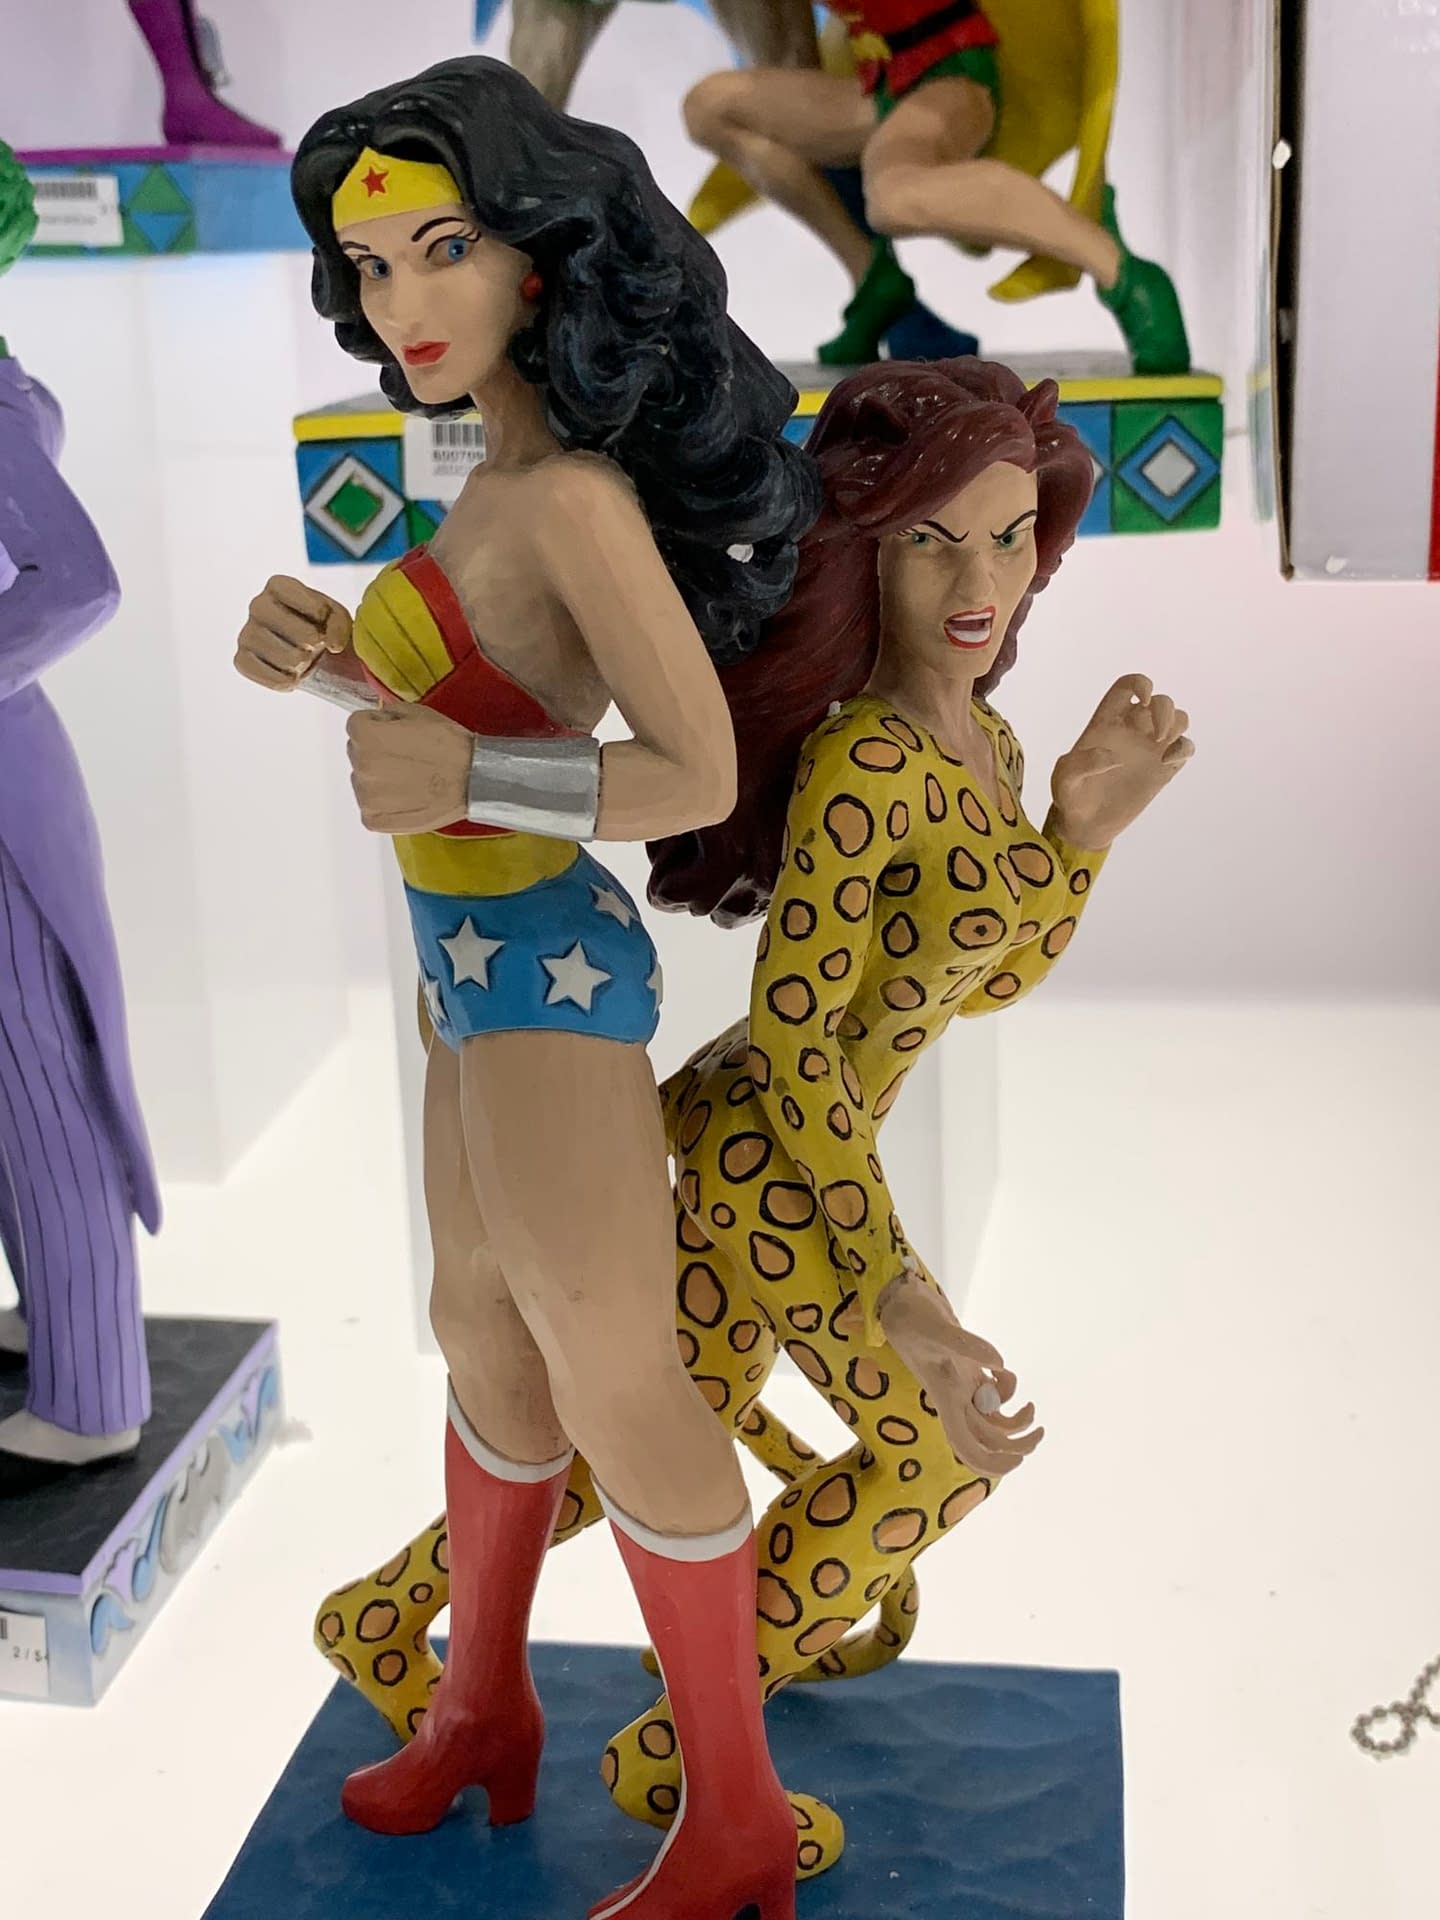 New York Toy Fair 2020: 43 Photos from the Enesco Booth